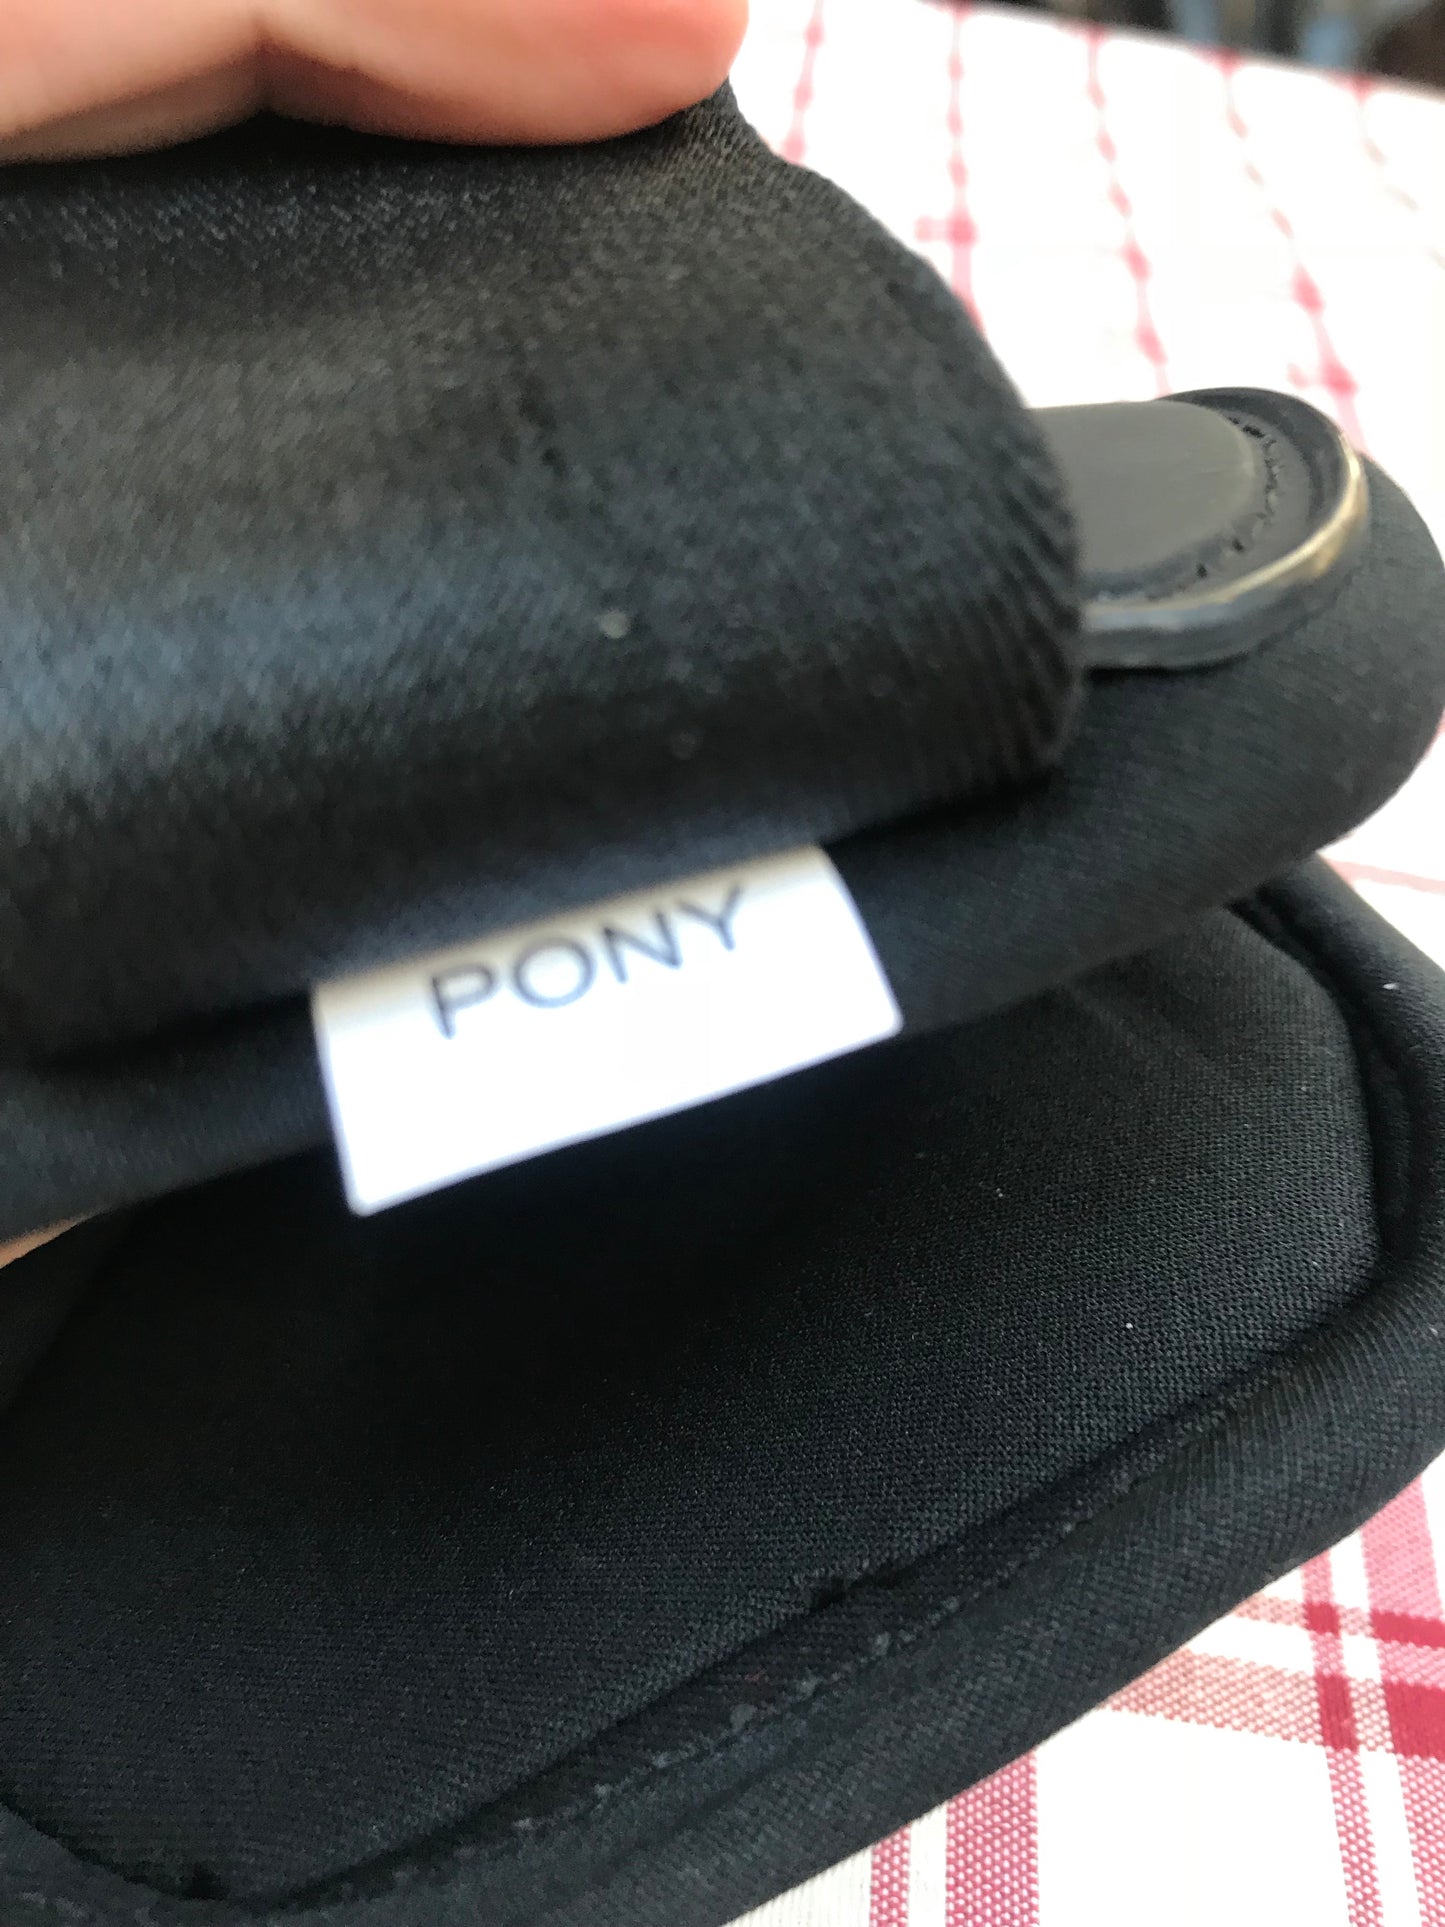 New masta fetlock boots pony size black FREE POSTAGE*